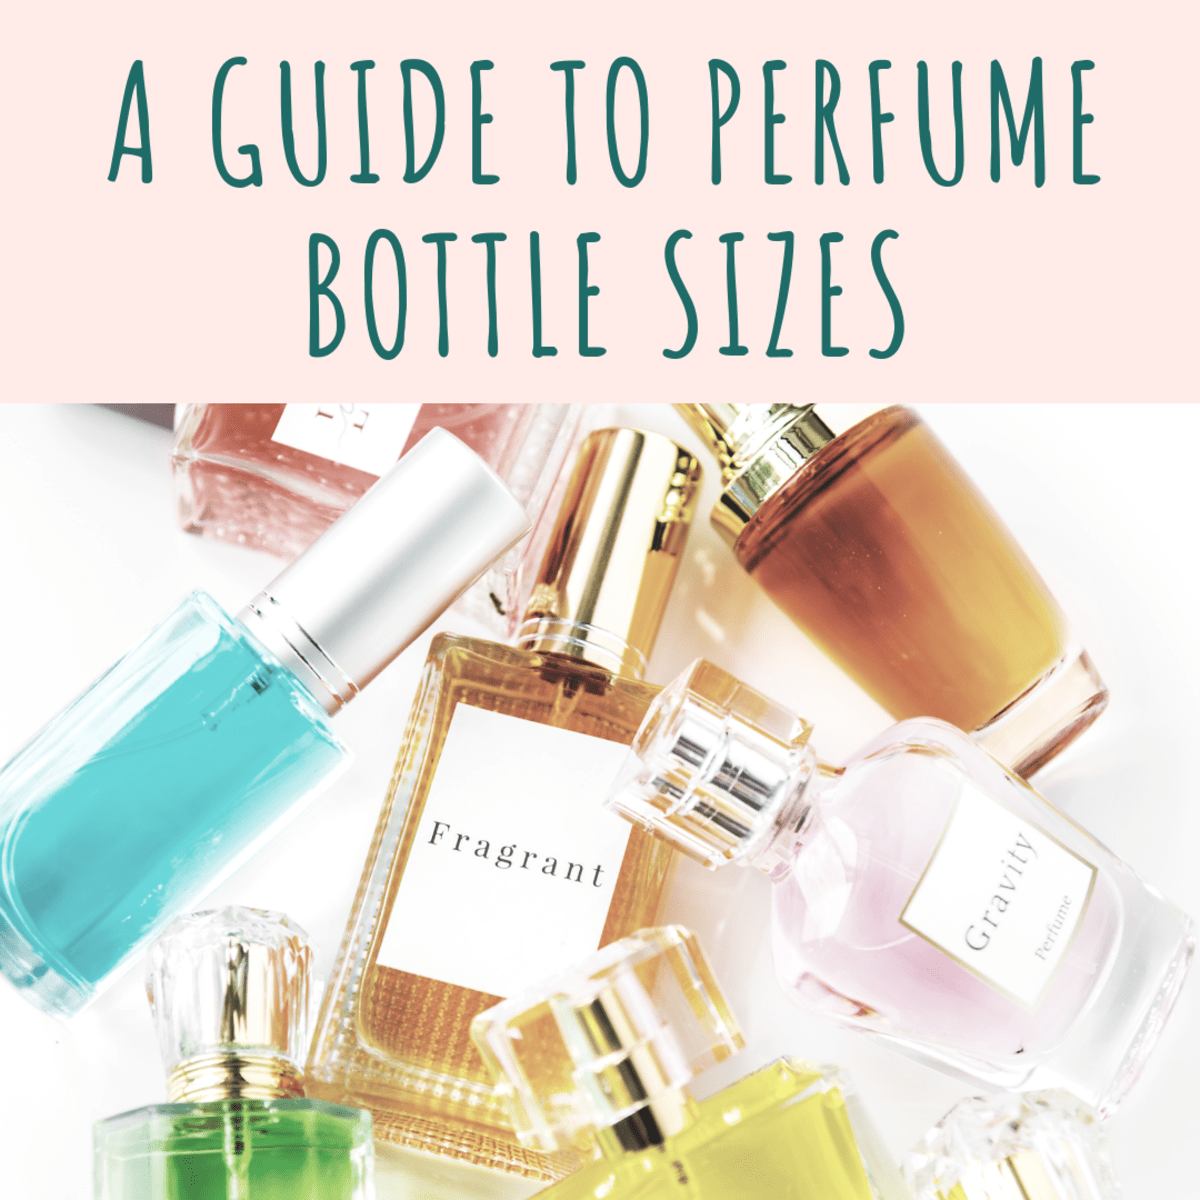 2 oz perfume bottle